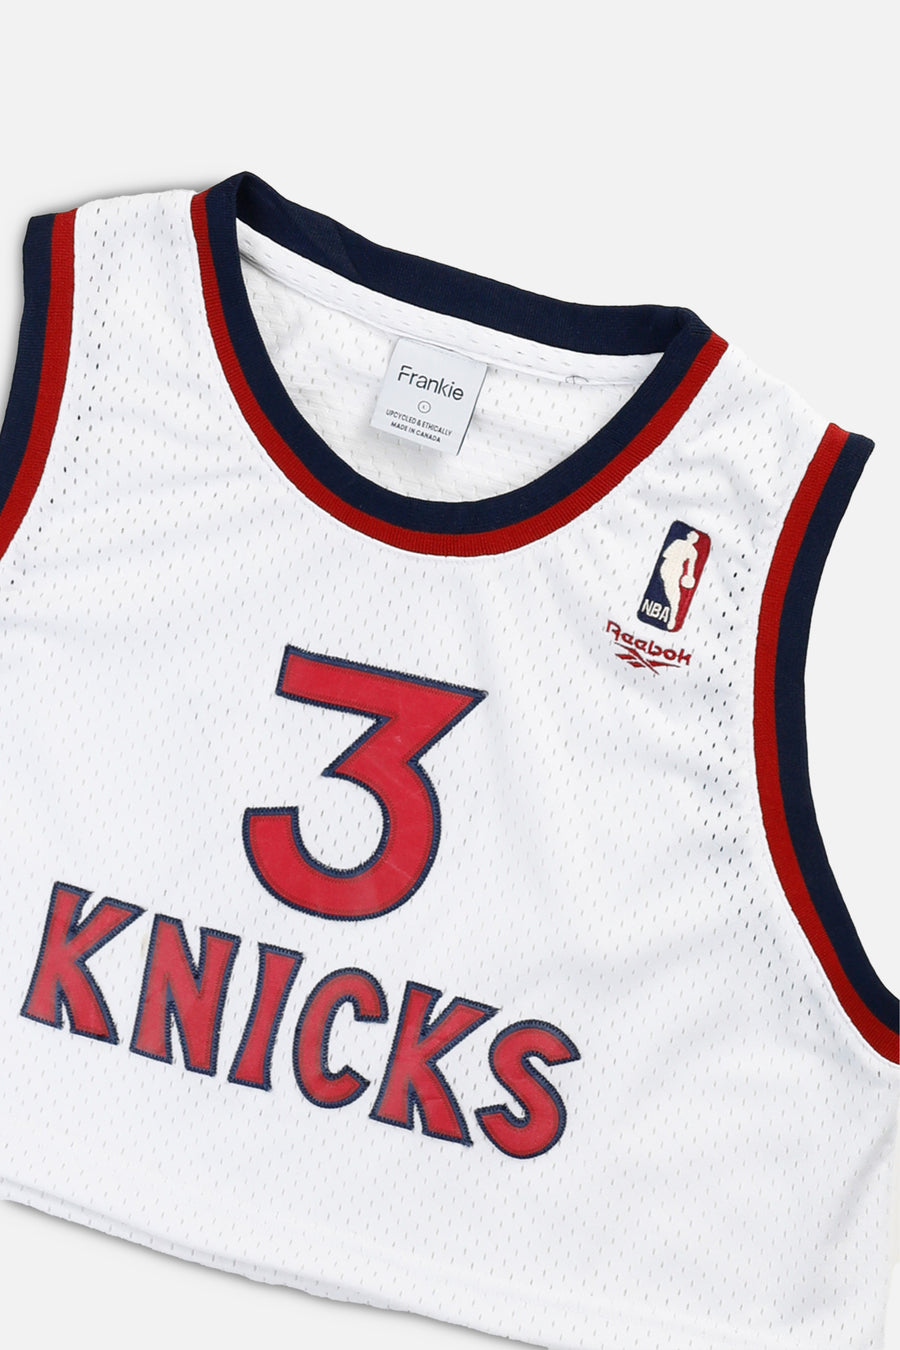 Rework NY Knicks NBA Crop Jersey - L